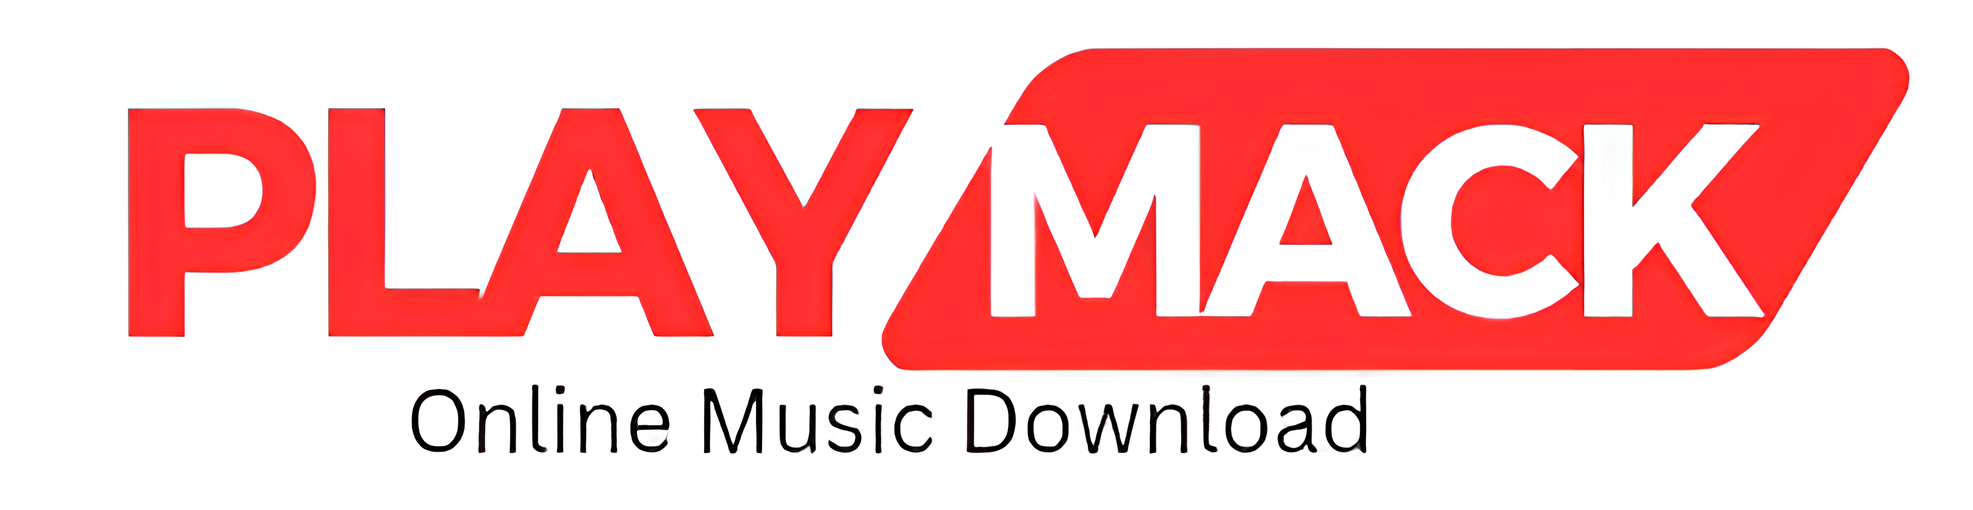 Playmack Logo